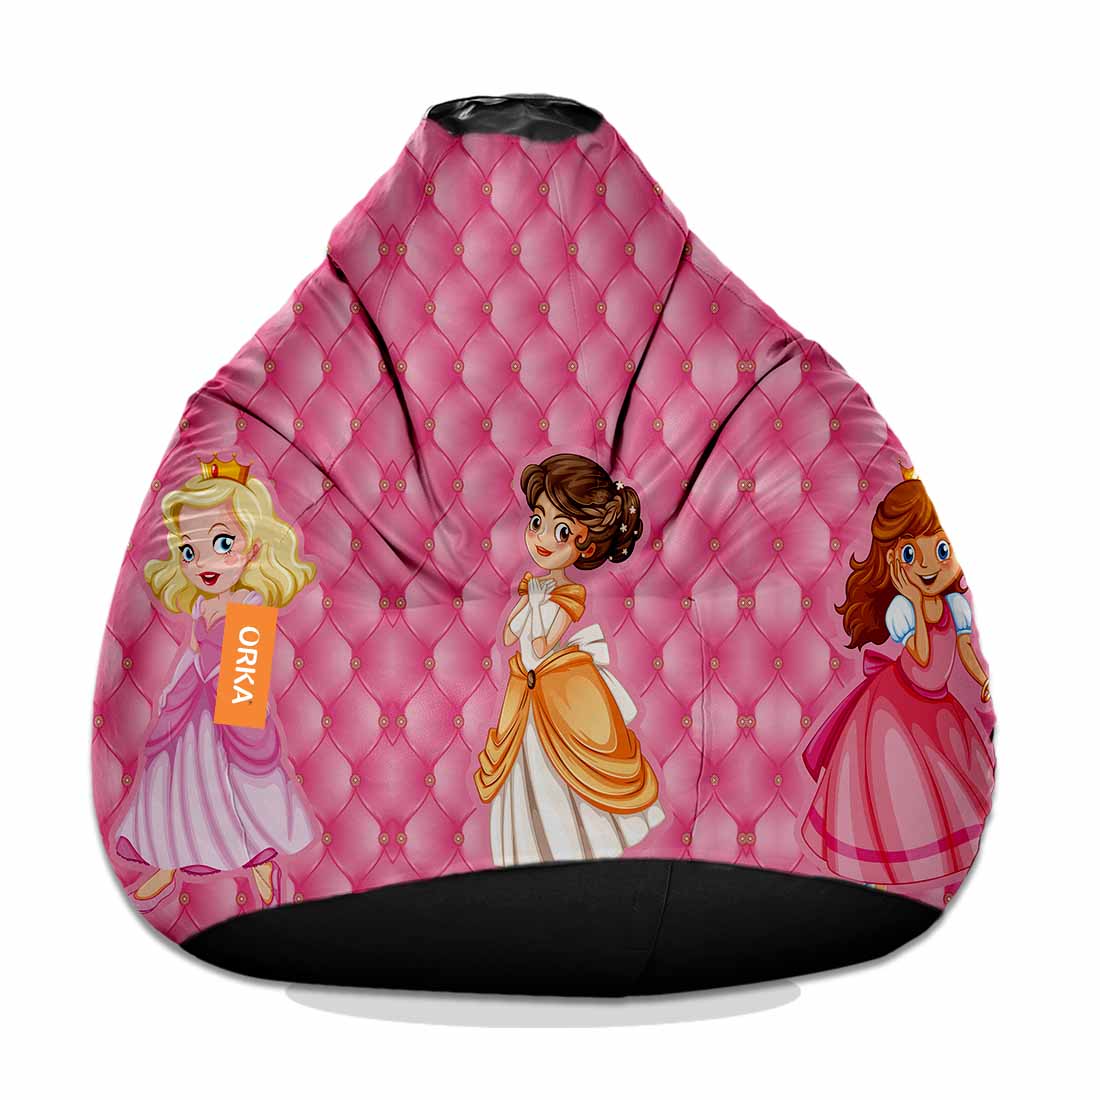 ORKA®Digital Printed Princess Theme Bean Bag 5   XXL  Cover Only 